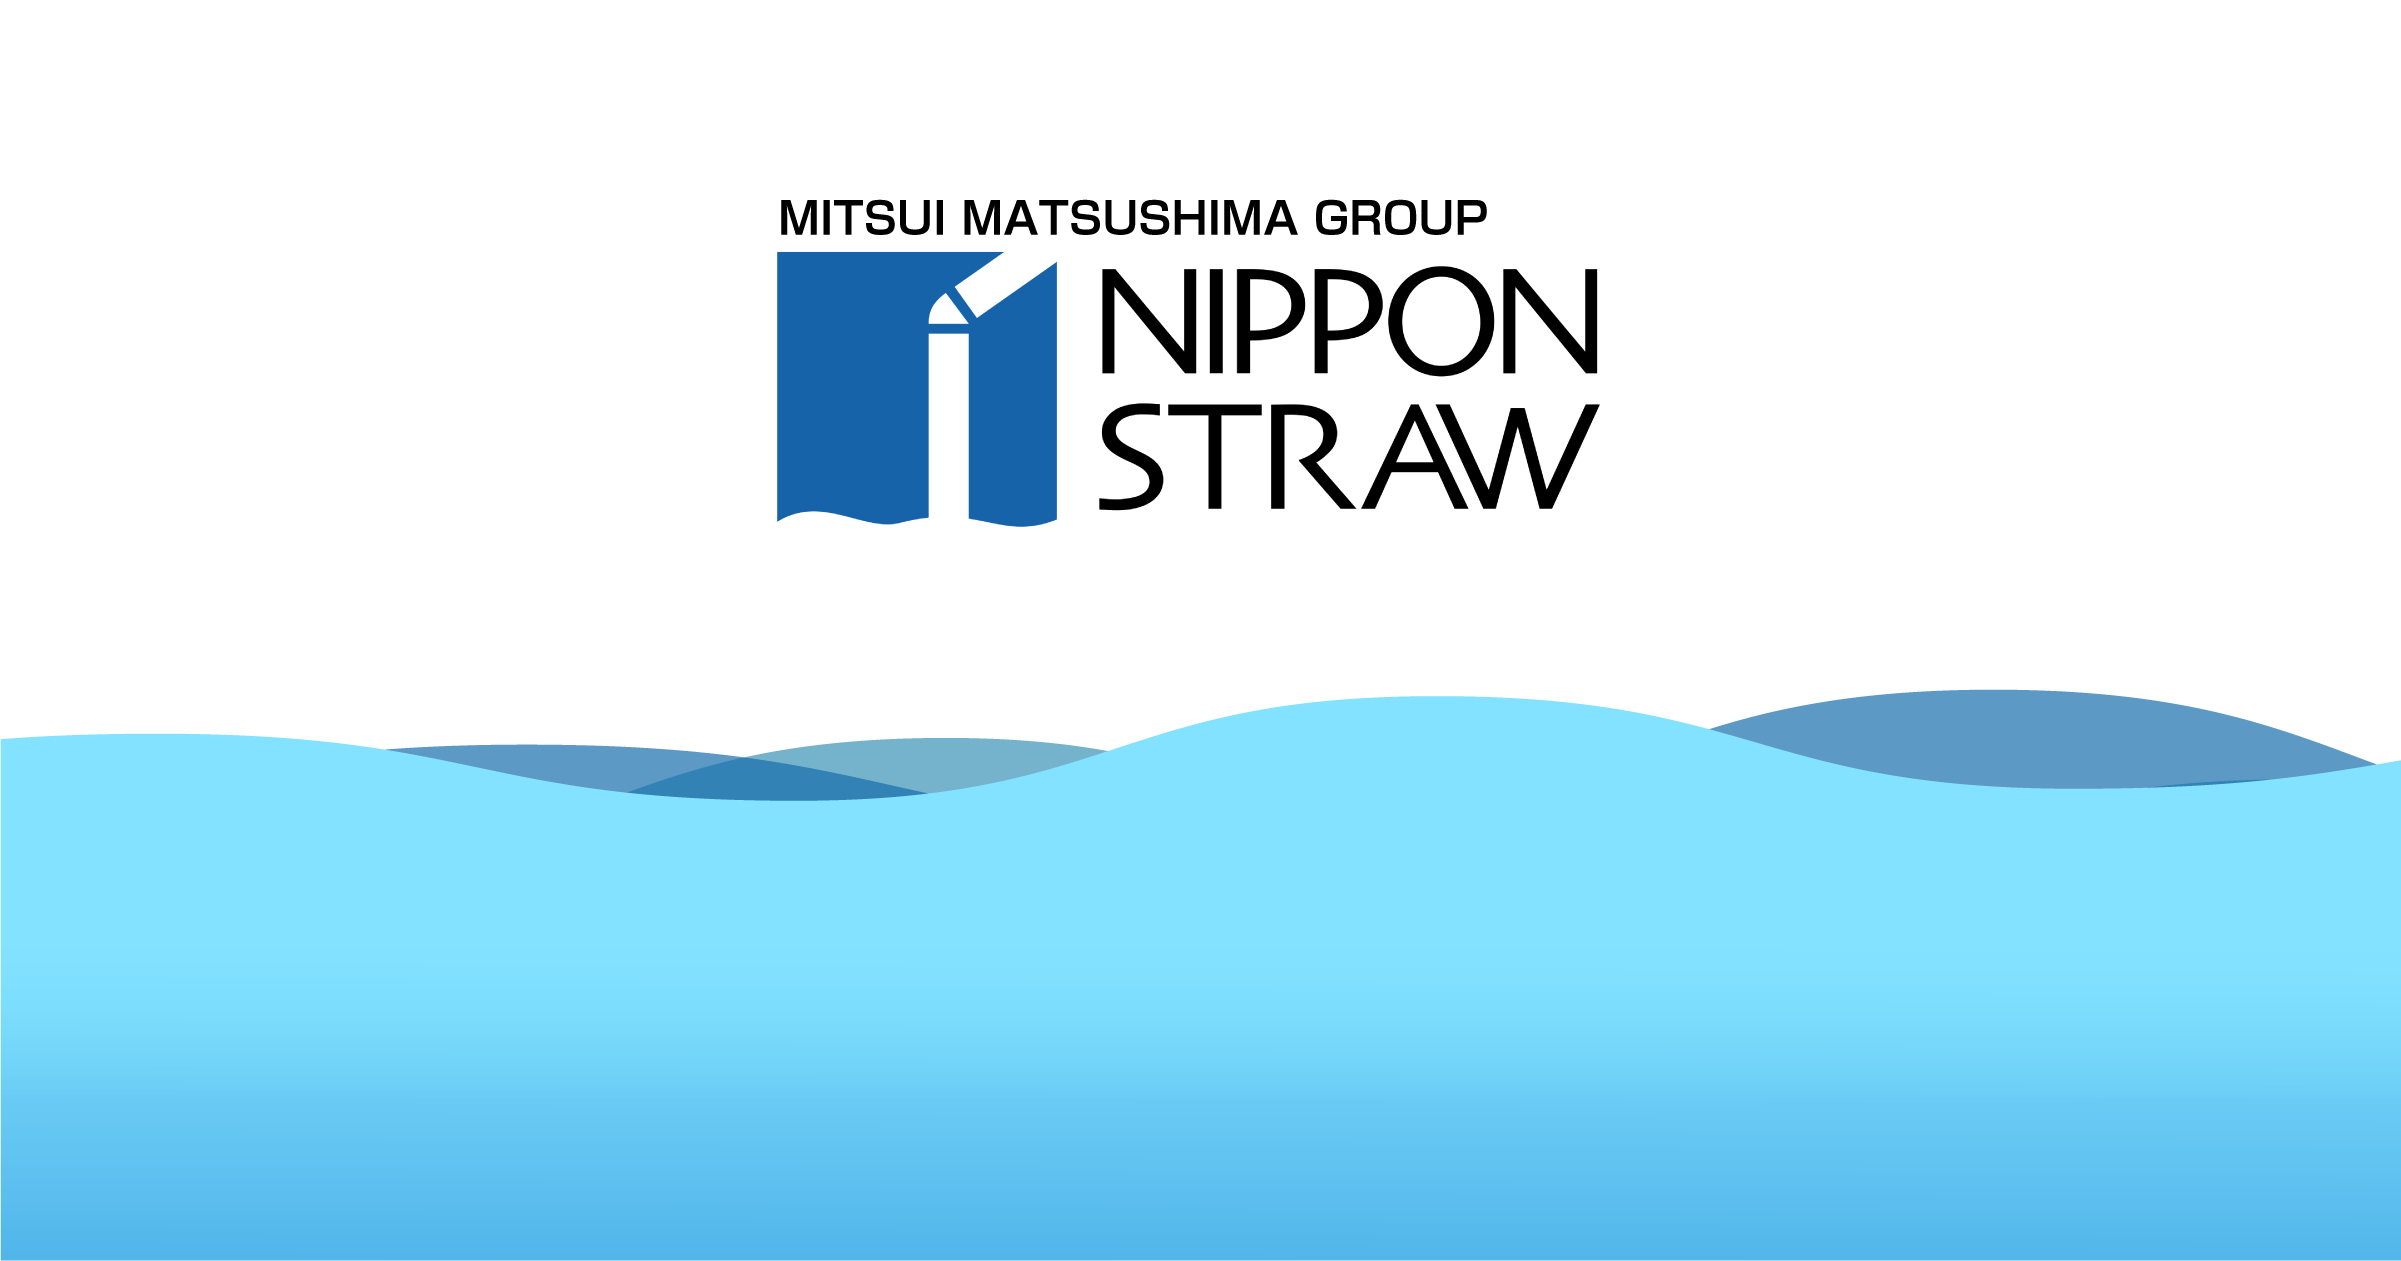 NIPPON STRAW Co., Ltd.  a leading company in the domestic straw market